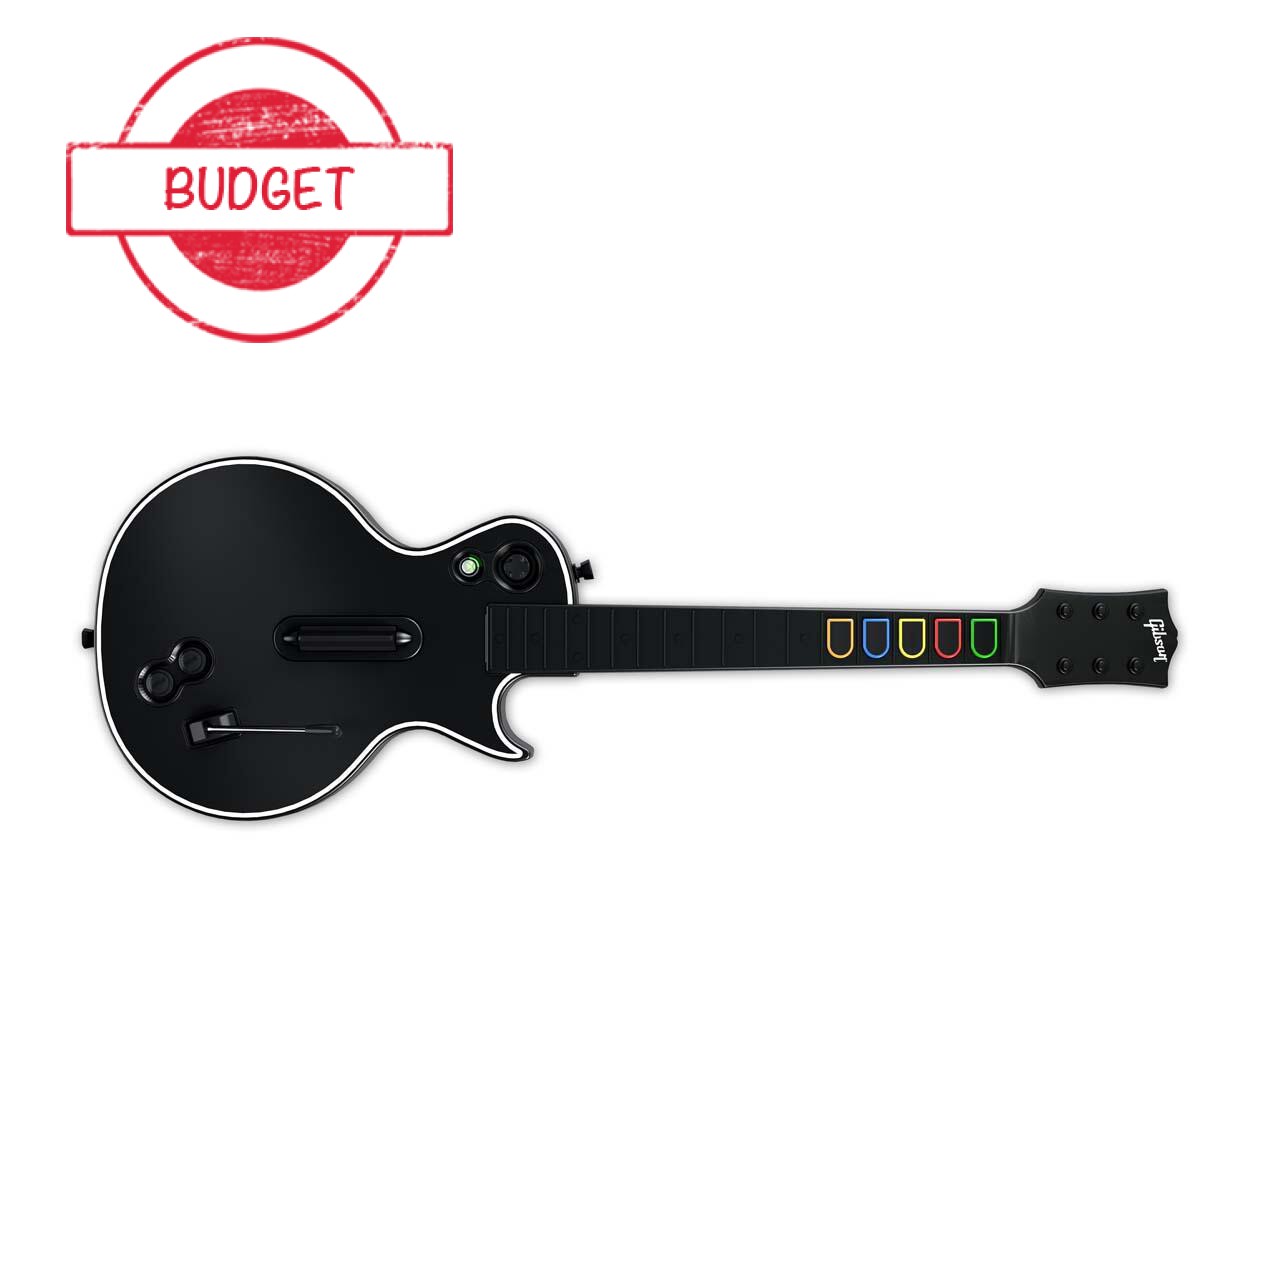 Guitar Hero Guitar - Legends of Rock - Budget - Xbox 360 Hardware